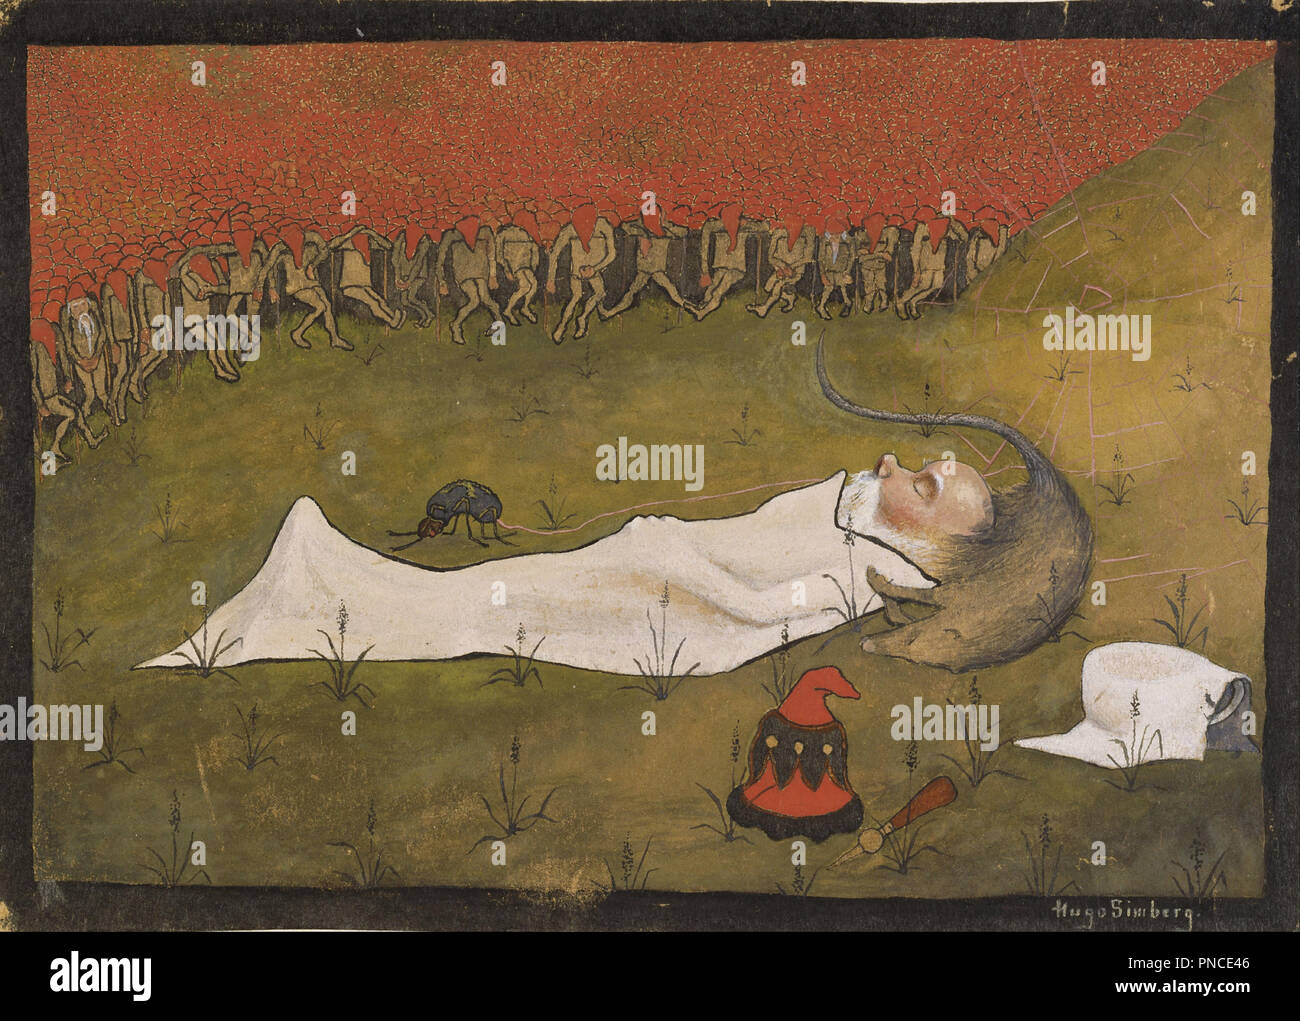 King Hobgoblin Sleeping. Date/Period: 1896. Painting. Watercolour and gouache on paper. Width: 28 cm. Height: 20 cm. Author: HUGO SIMBERG. SIMBERG, HUGO. Stock Photo